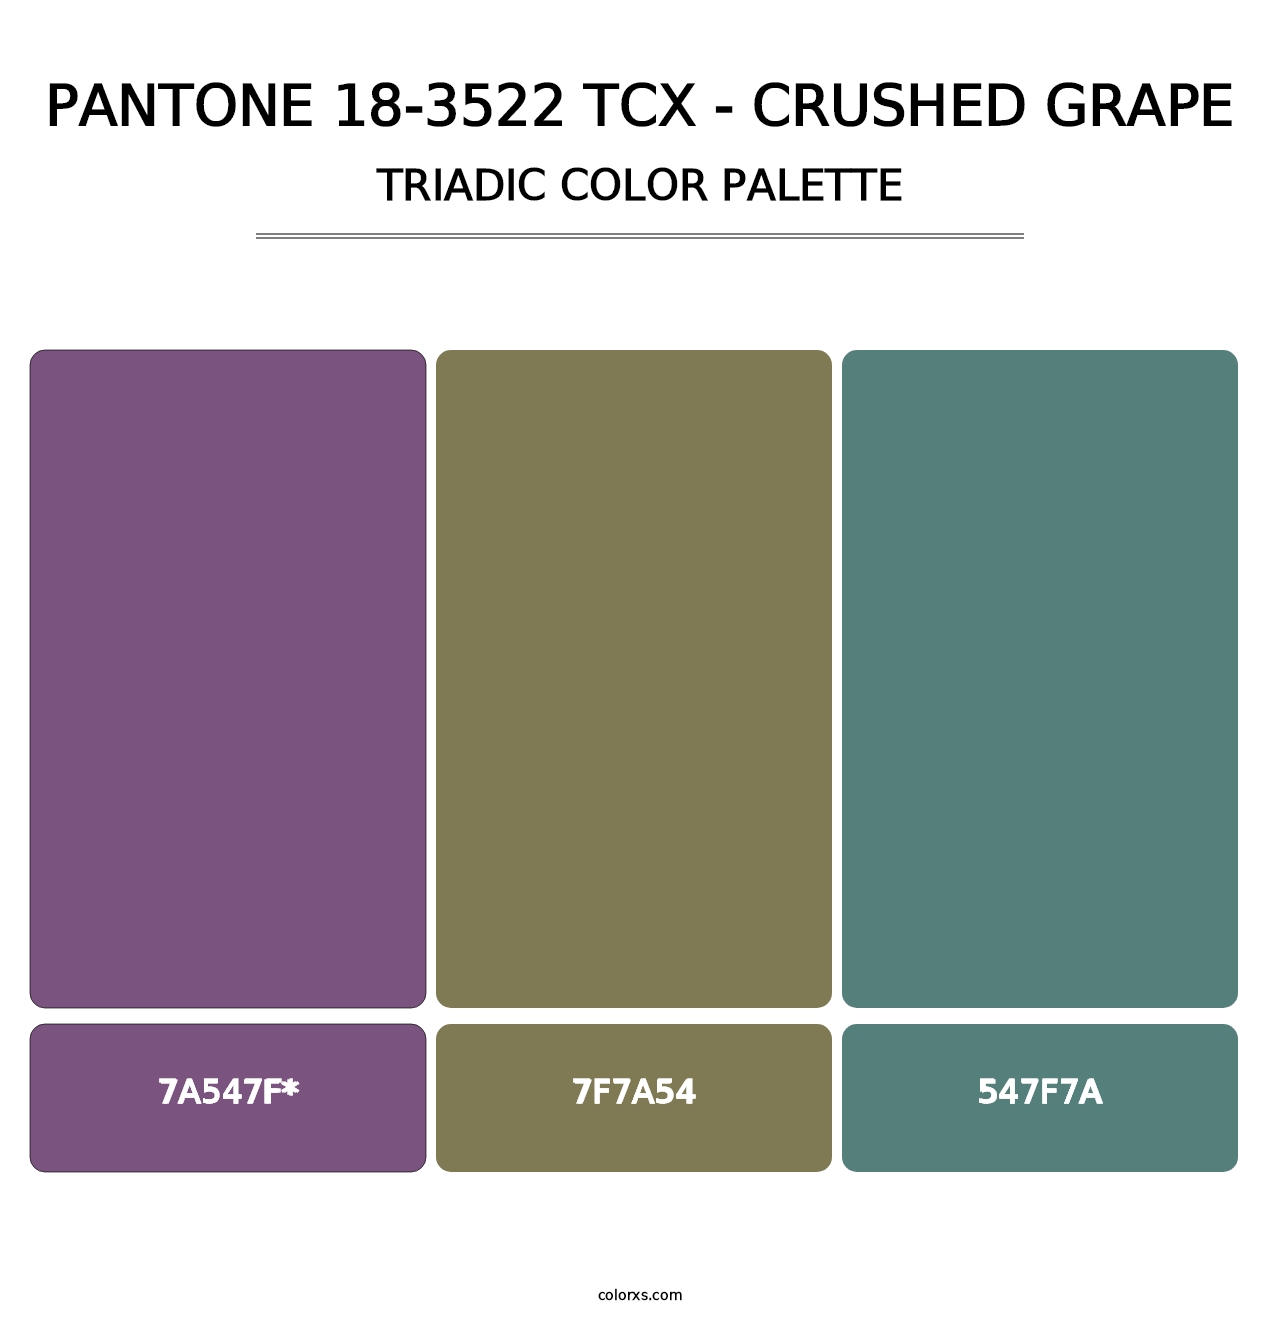 PANTONE 18-3522 TCX - Crushed Grape - Triadic Color Palette